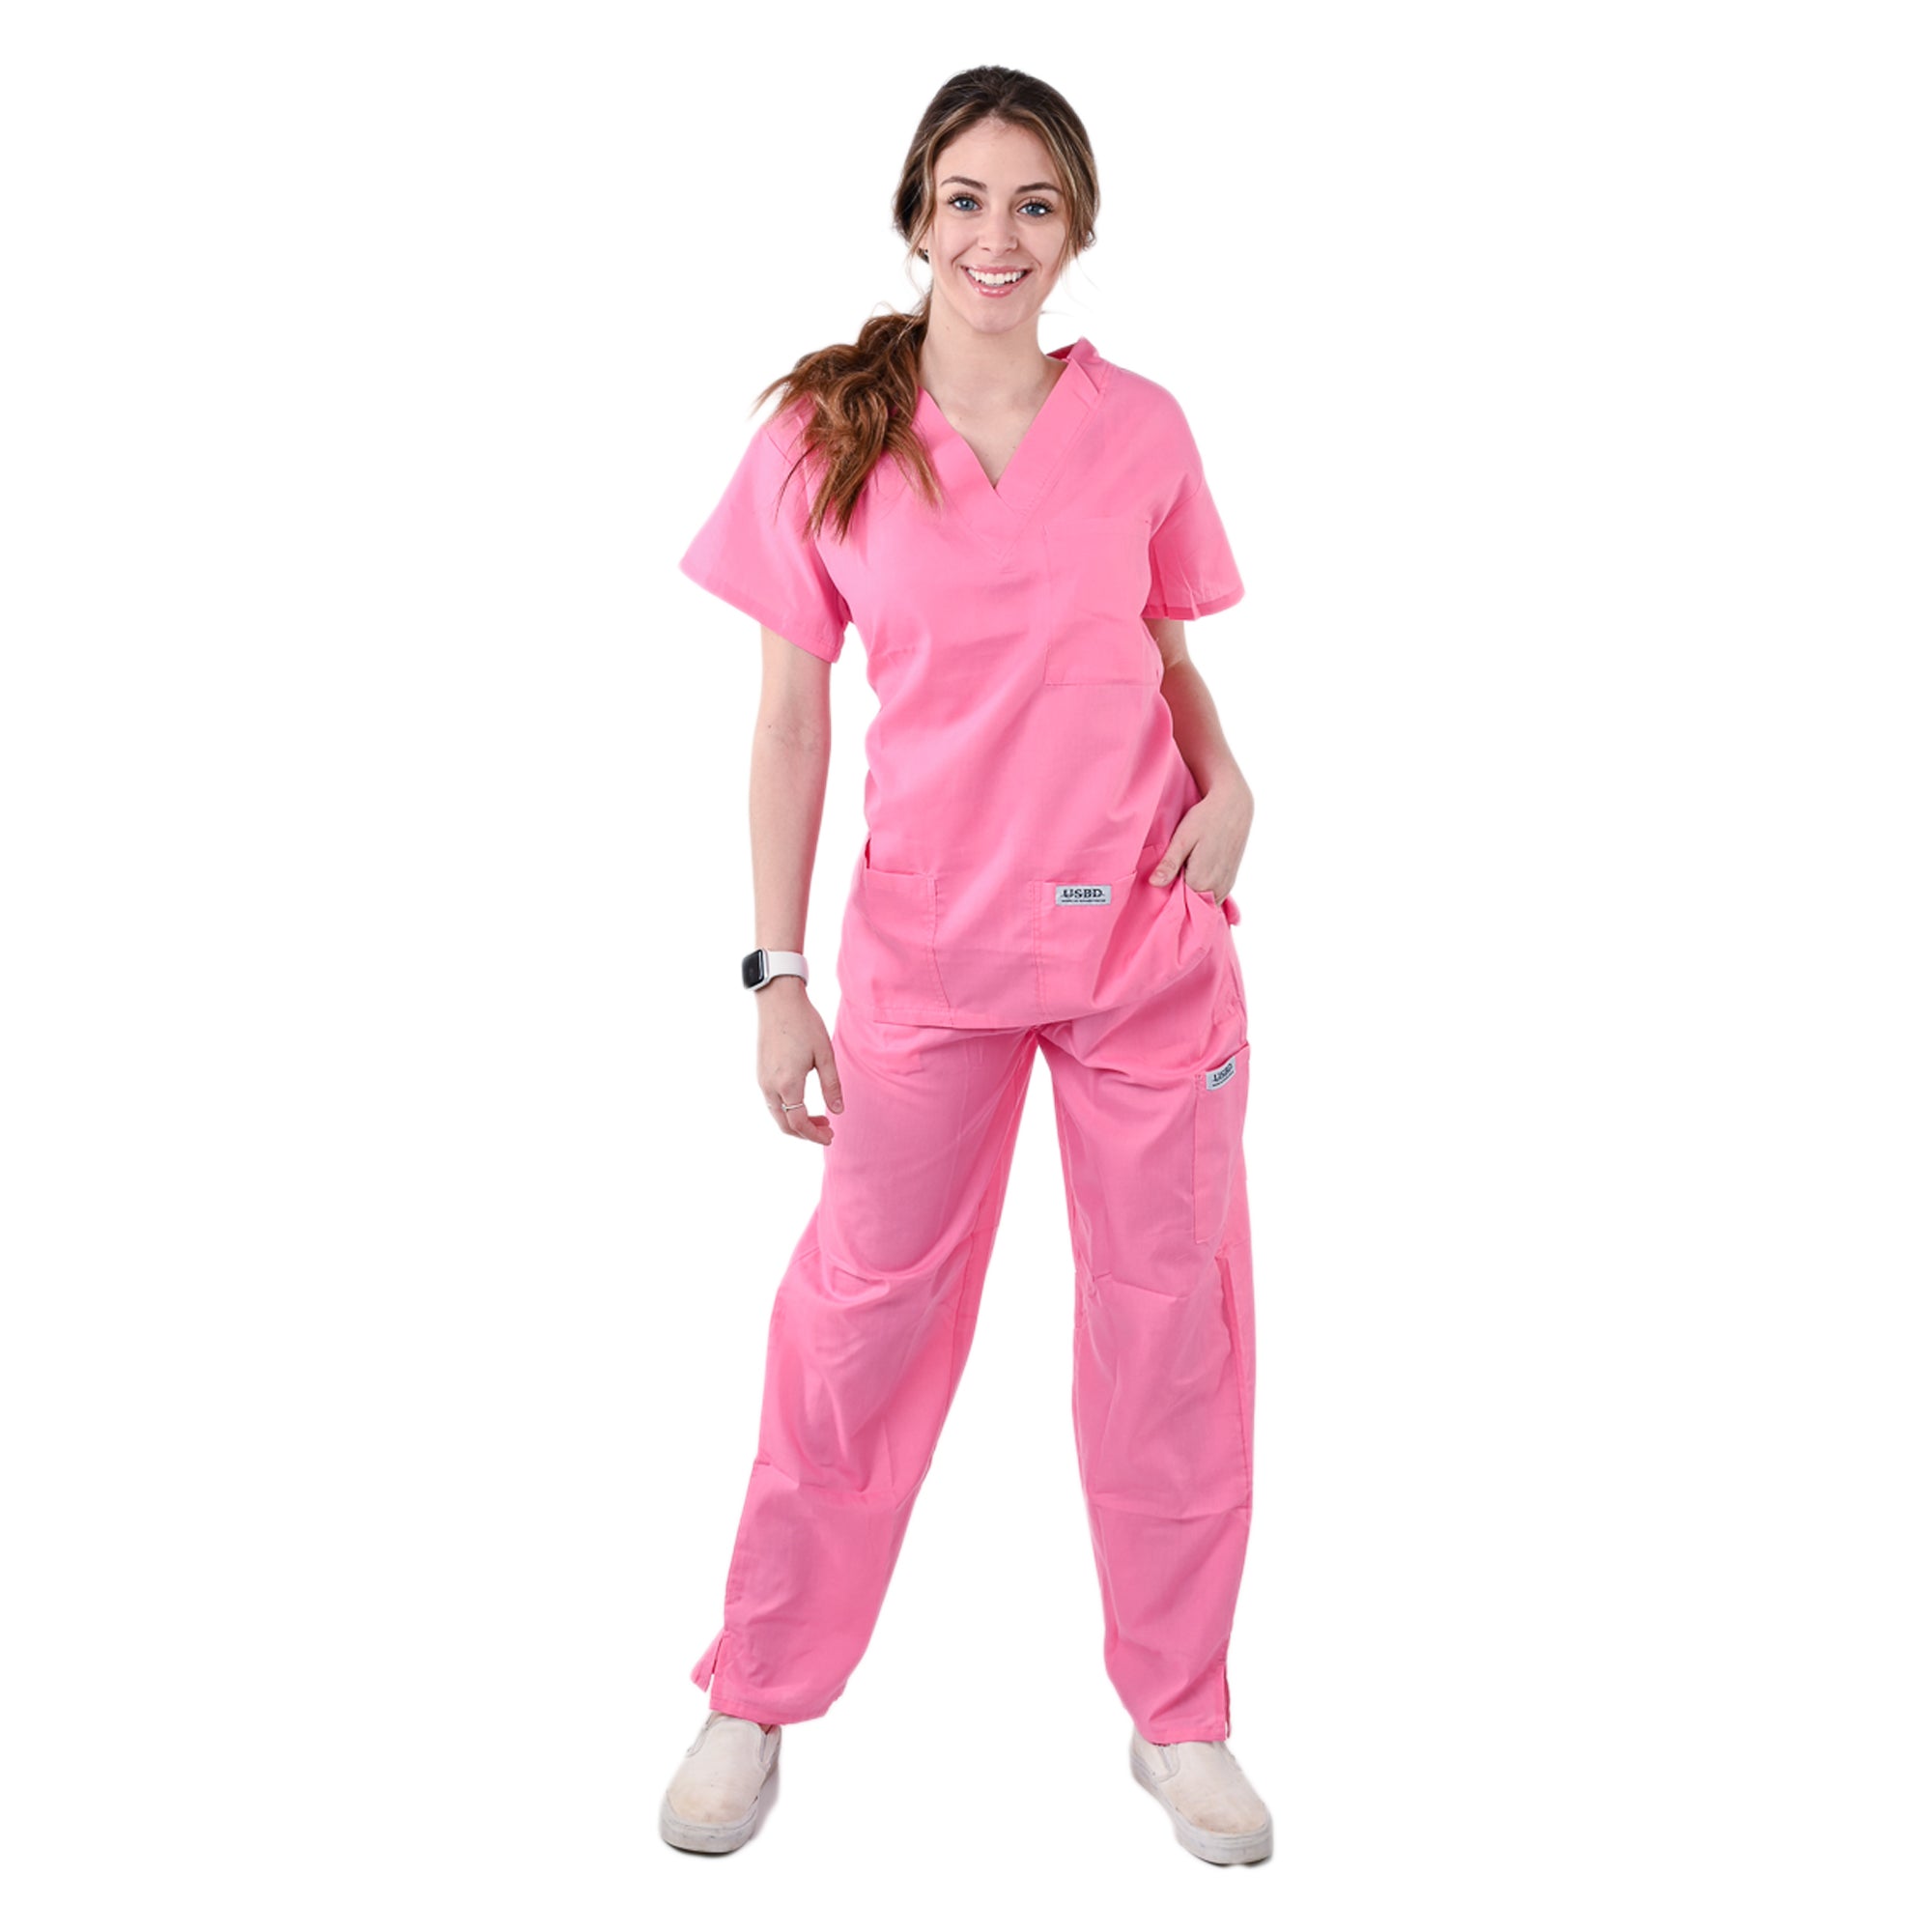 USBD Premium Medical Scrubs sets for Women Pants & Tops Hospital nursing Scrubs